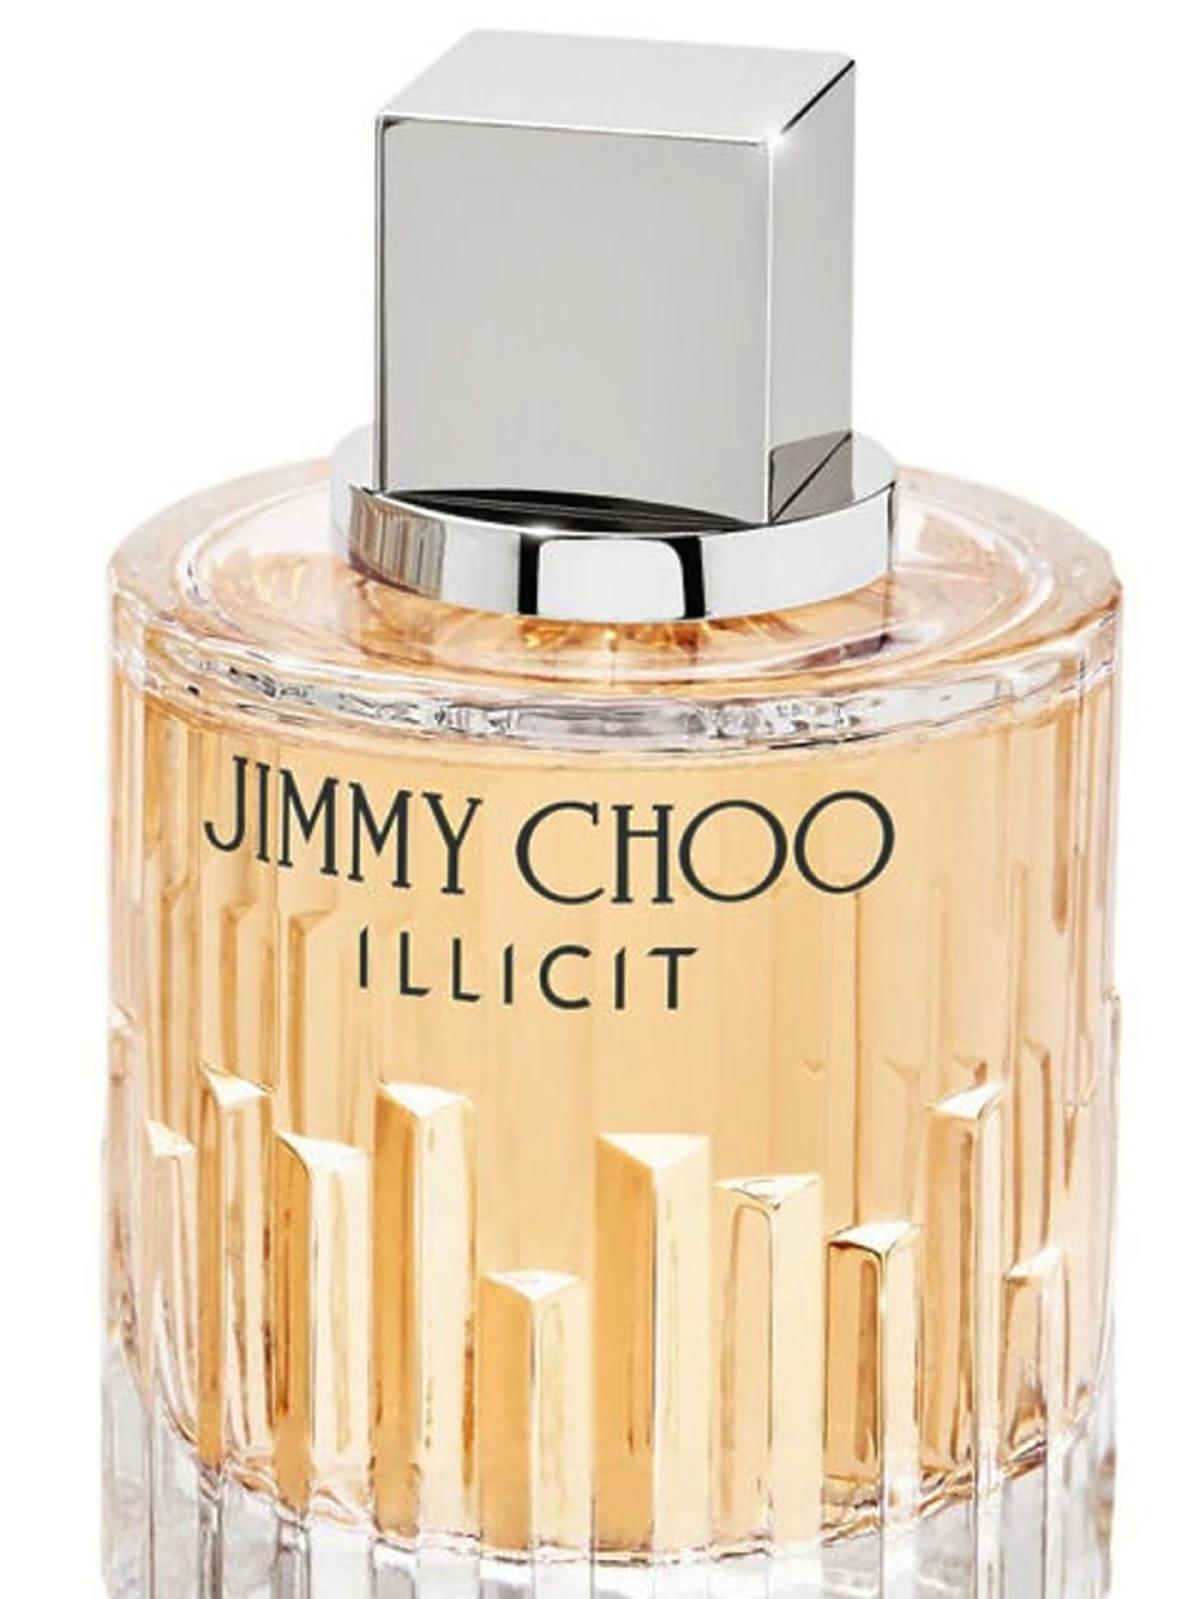 Jimmy Choo - Illicit